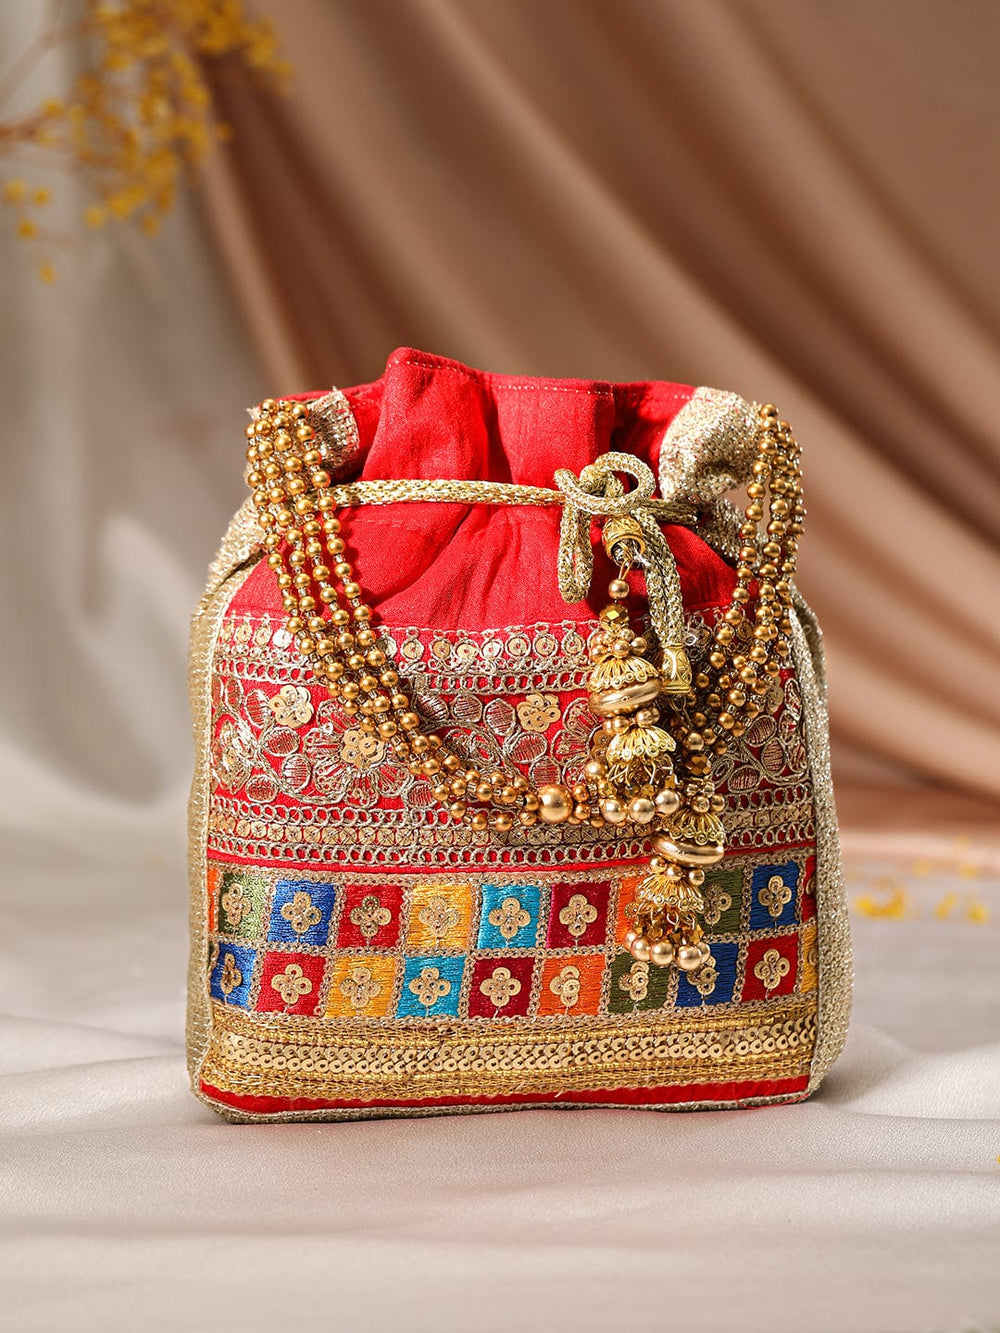 Rubans Red Coloured Potli Bag With Multicoloured Embroidery Design Handbag, Wallet Accessories & Clutche